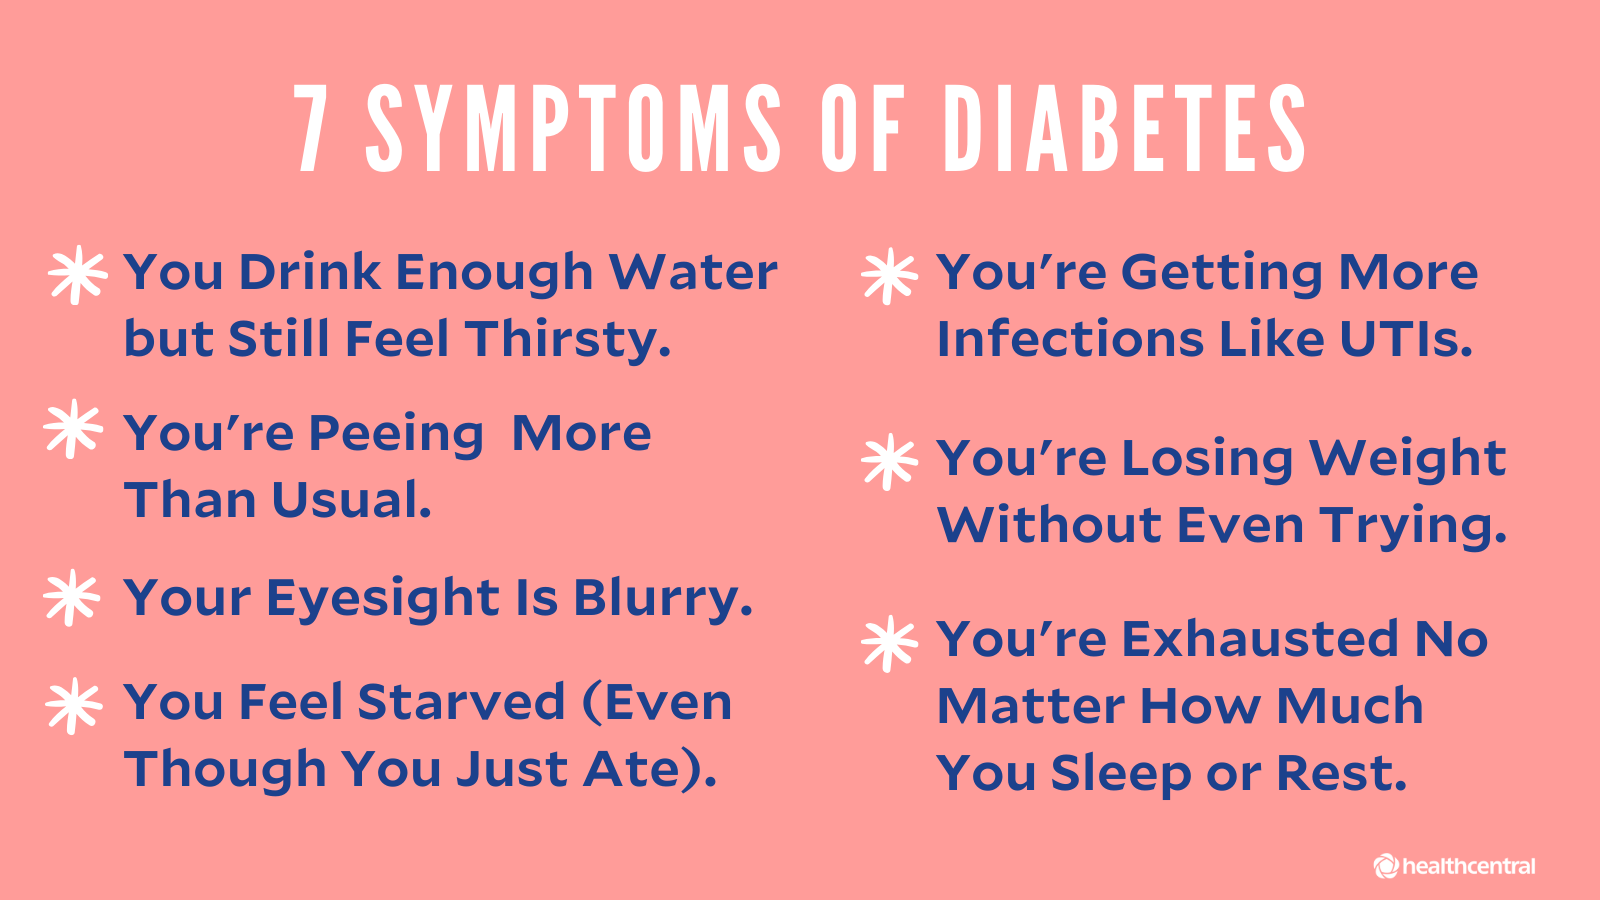 diabetes stories of symptoms)